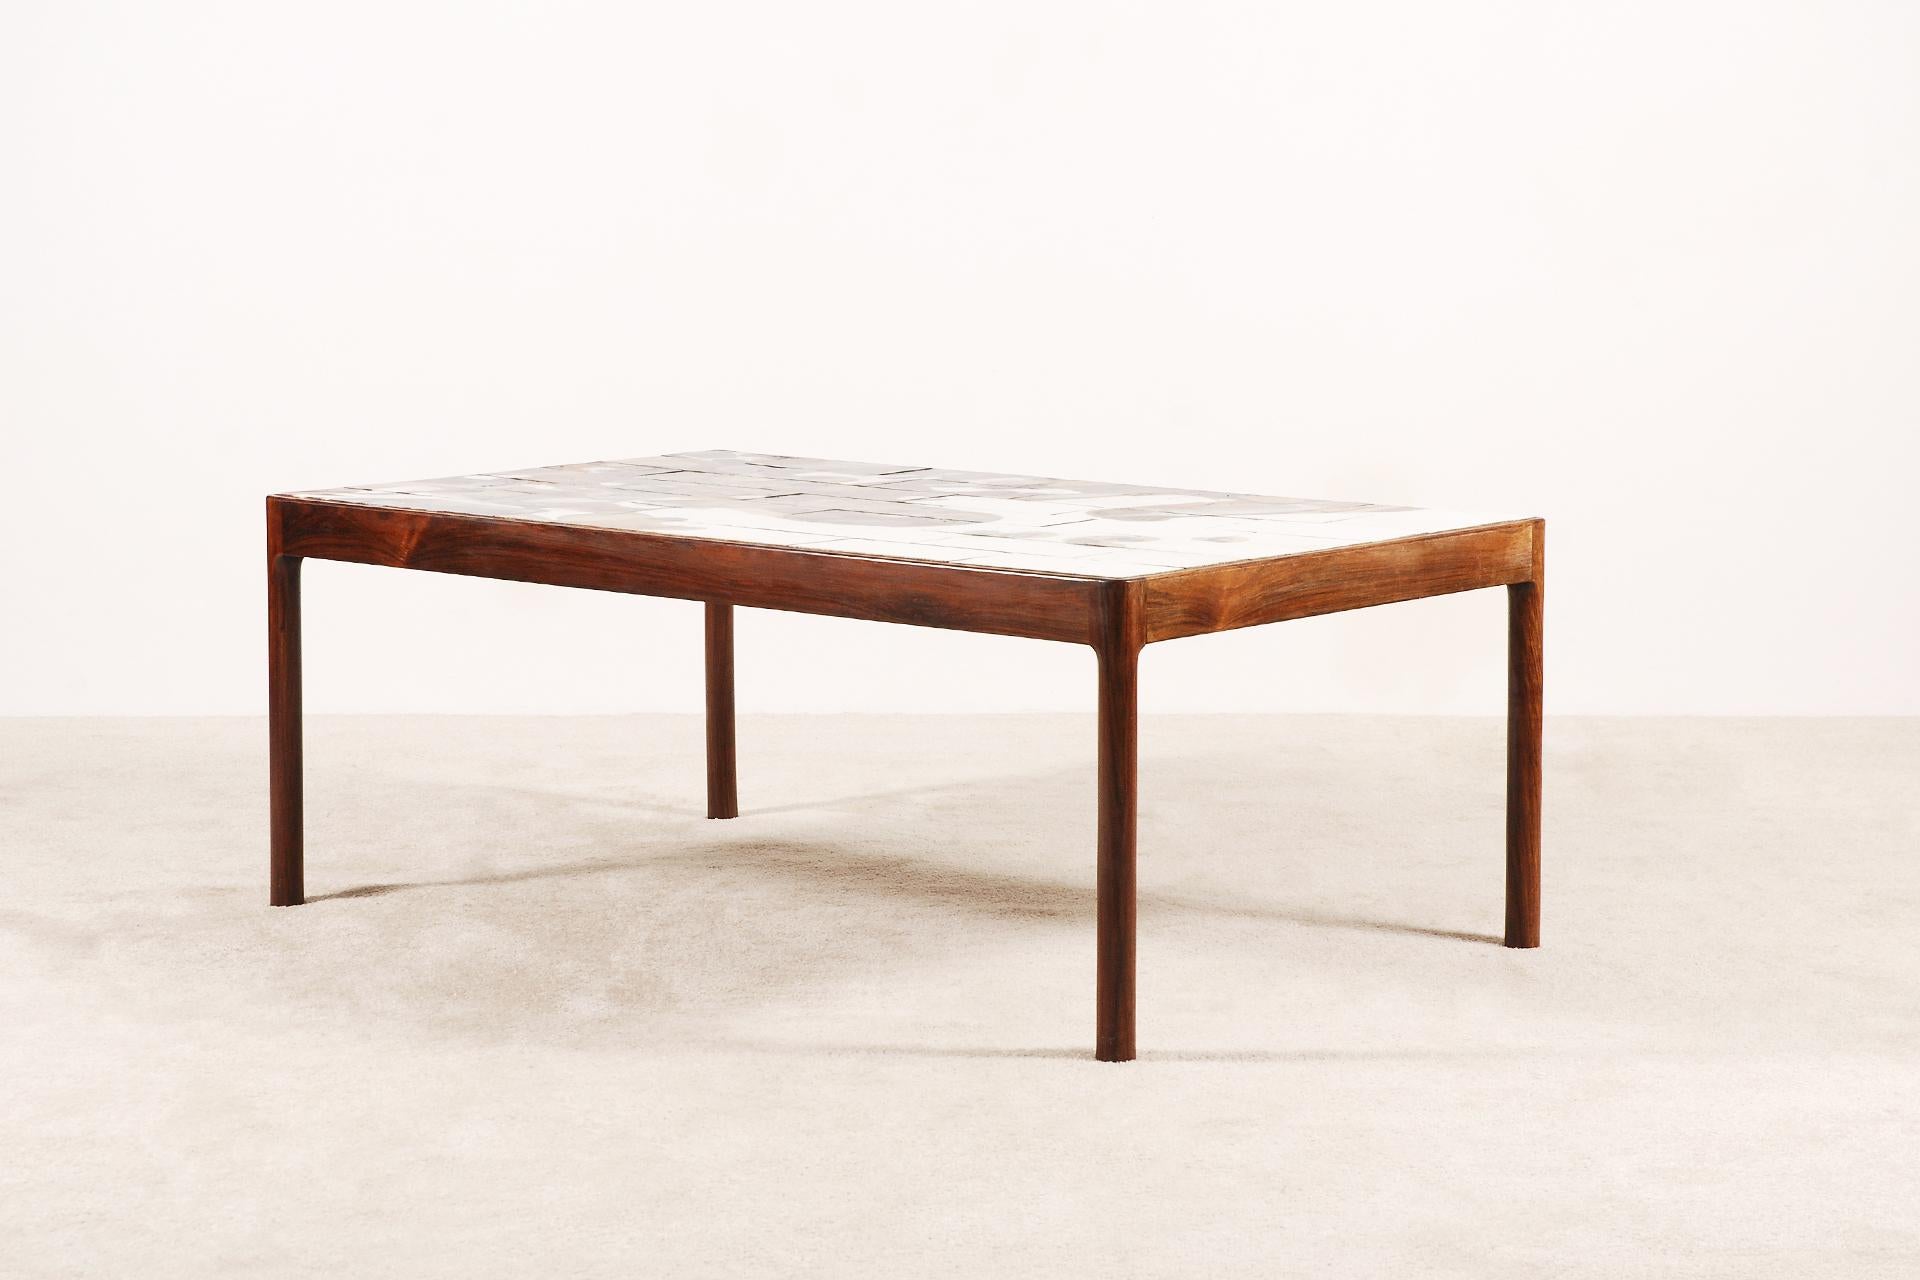 Scandinavian Modern Jeppe Hagedorn-Olsen, Large Coffee Table with Ceramic Tiles, 1960